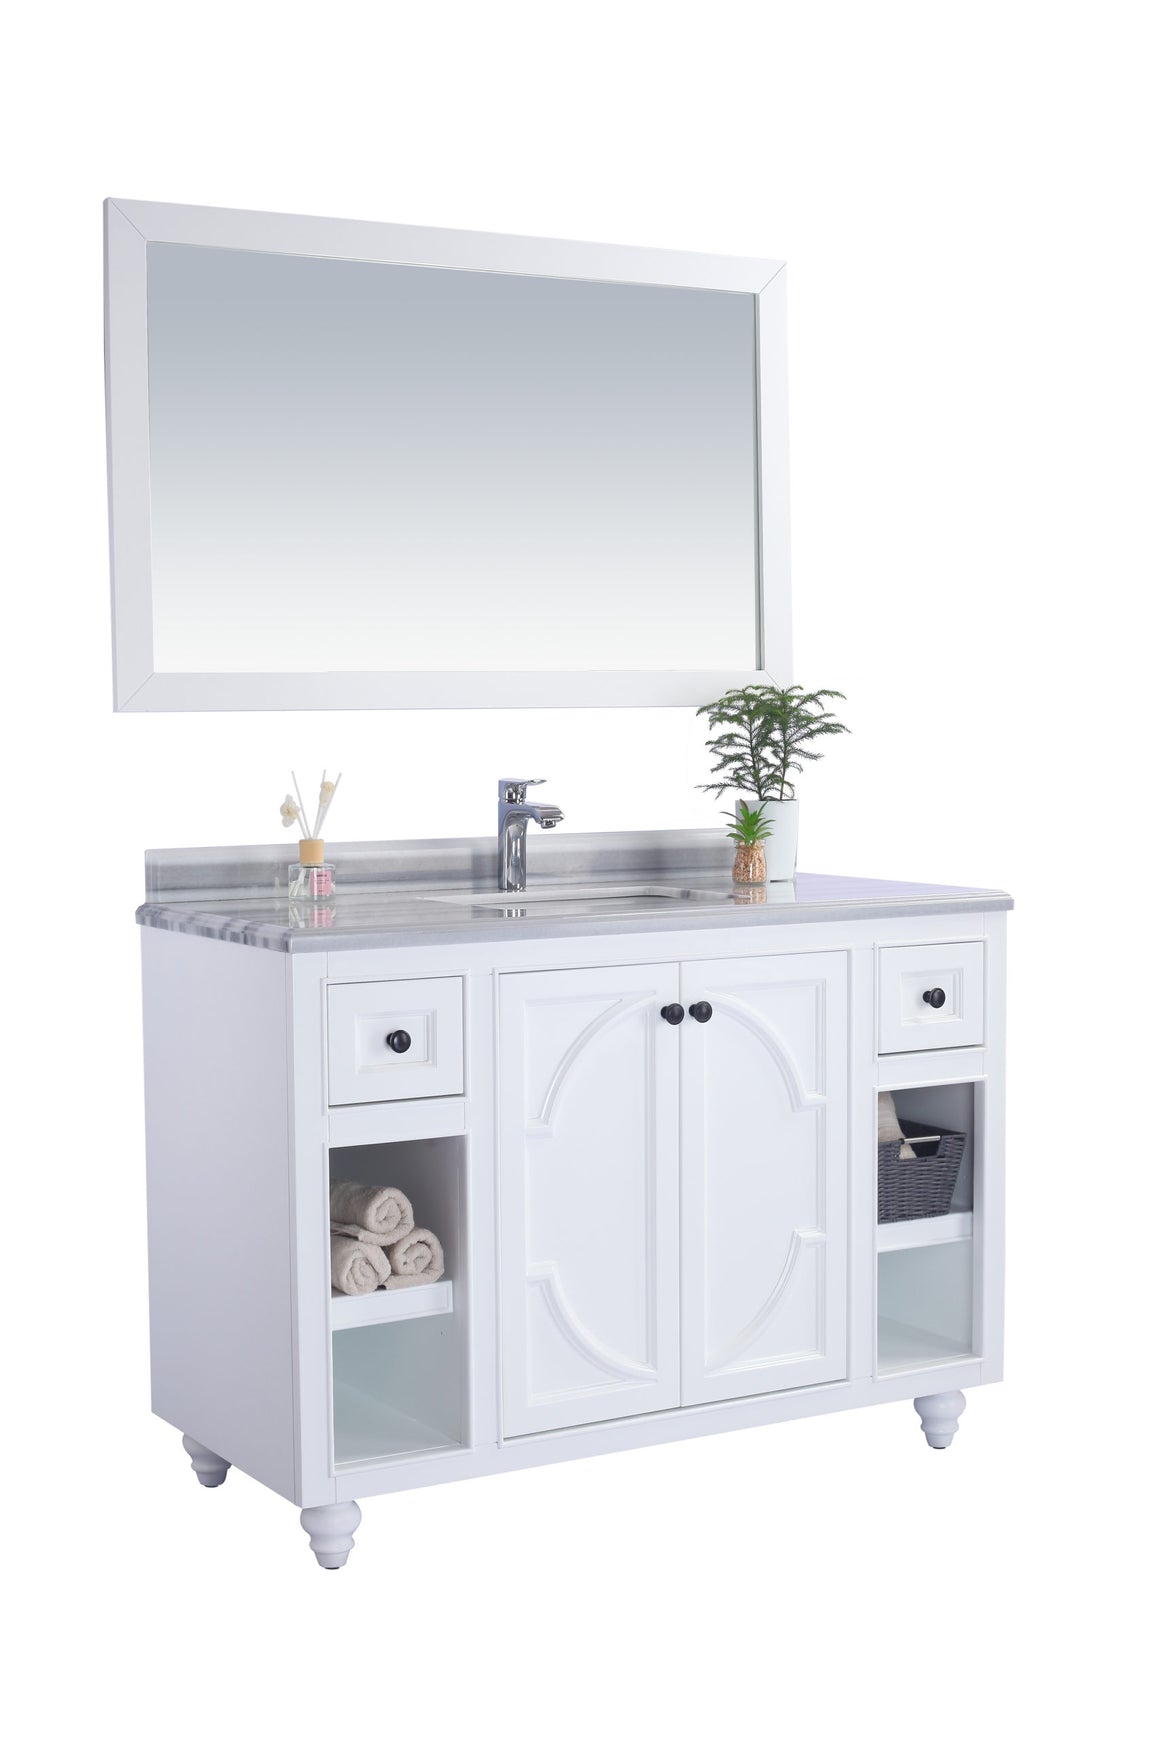 Odyssey - 48 - White Cabinet + White Stripes Marble Countertop